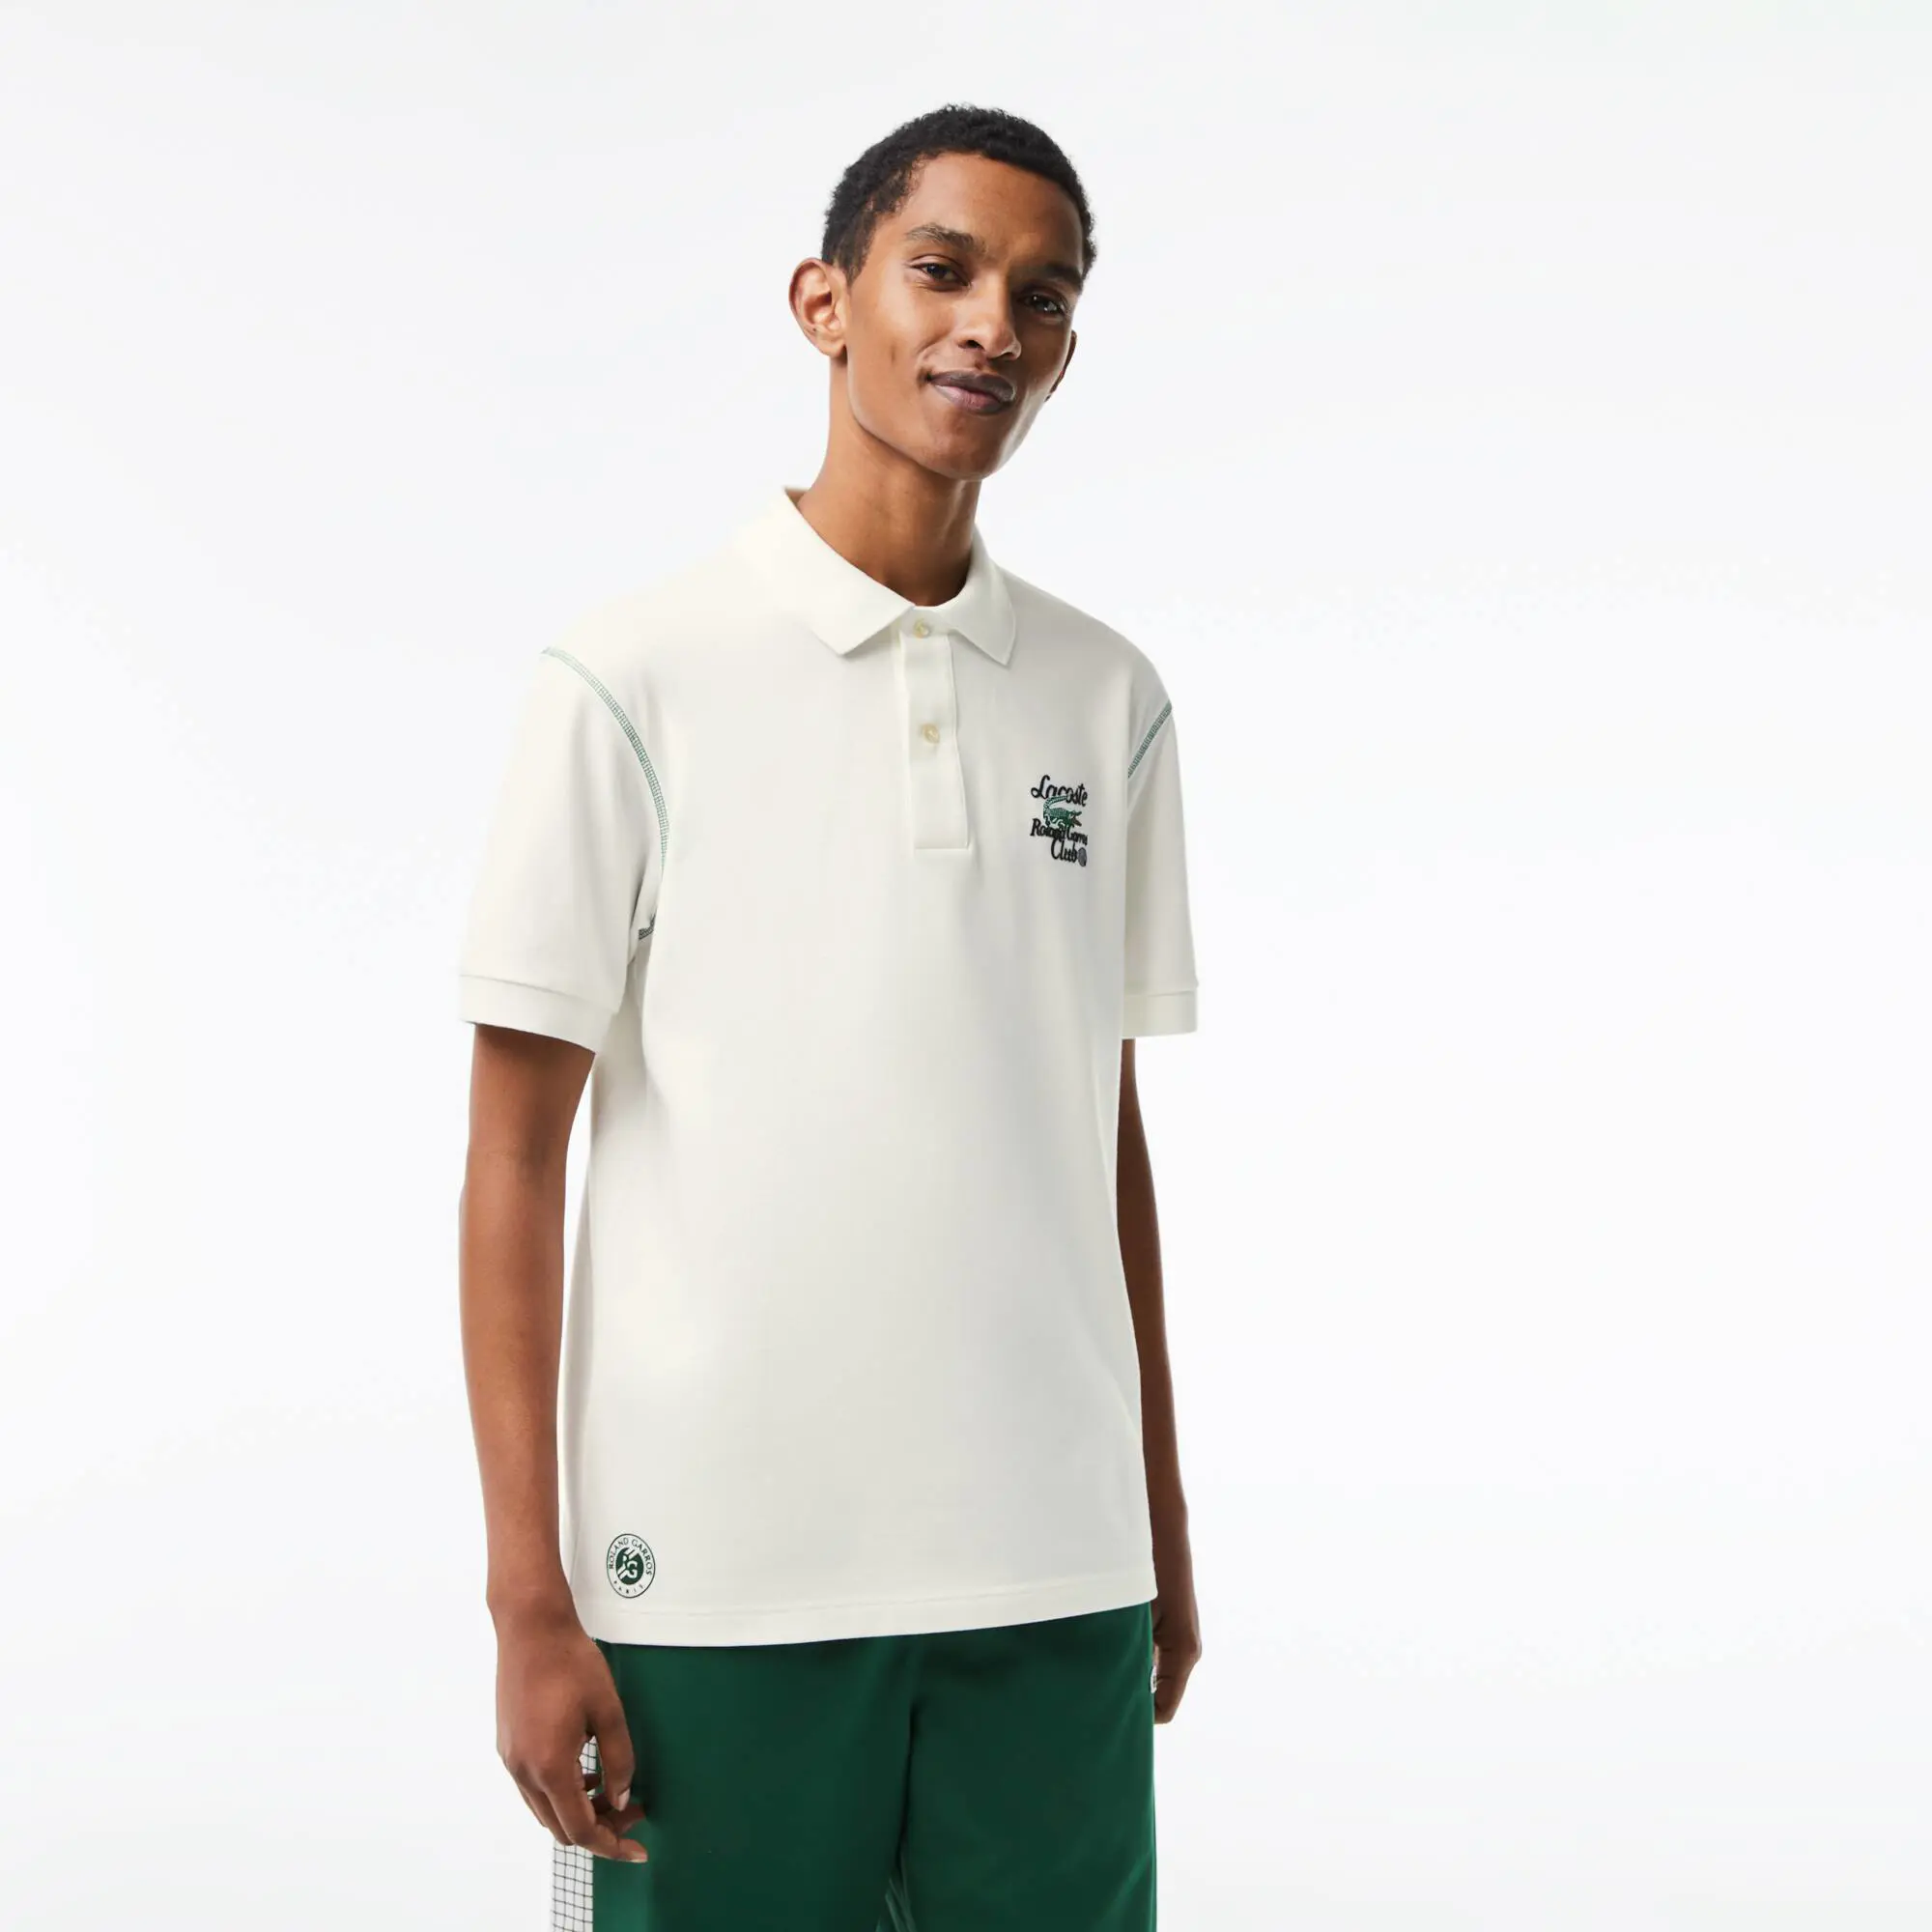 Lacoste Men’s Lacoste Sport Roland Garros Edition Piqué Polo Shirt. 1